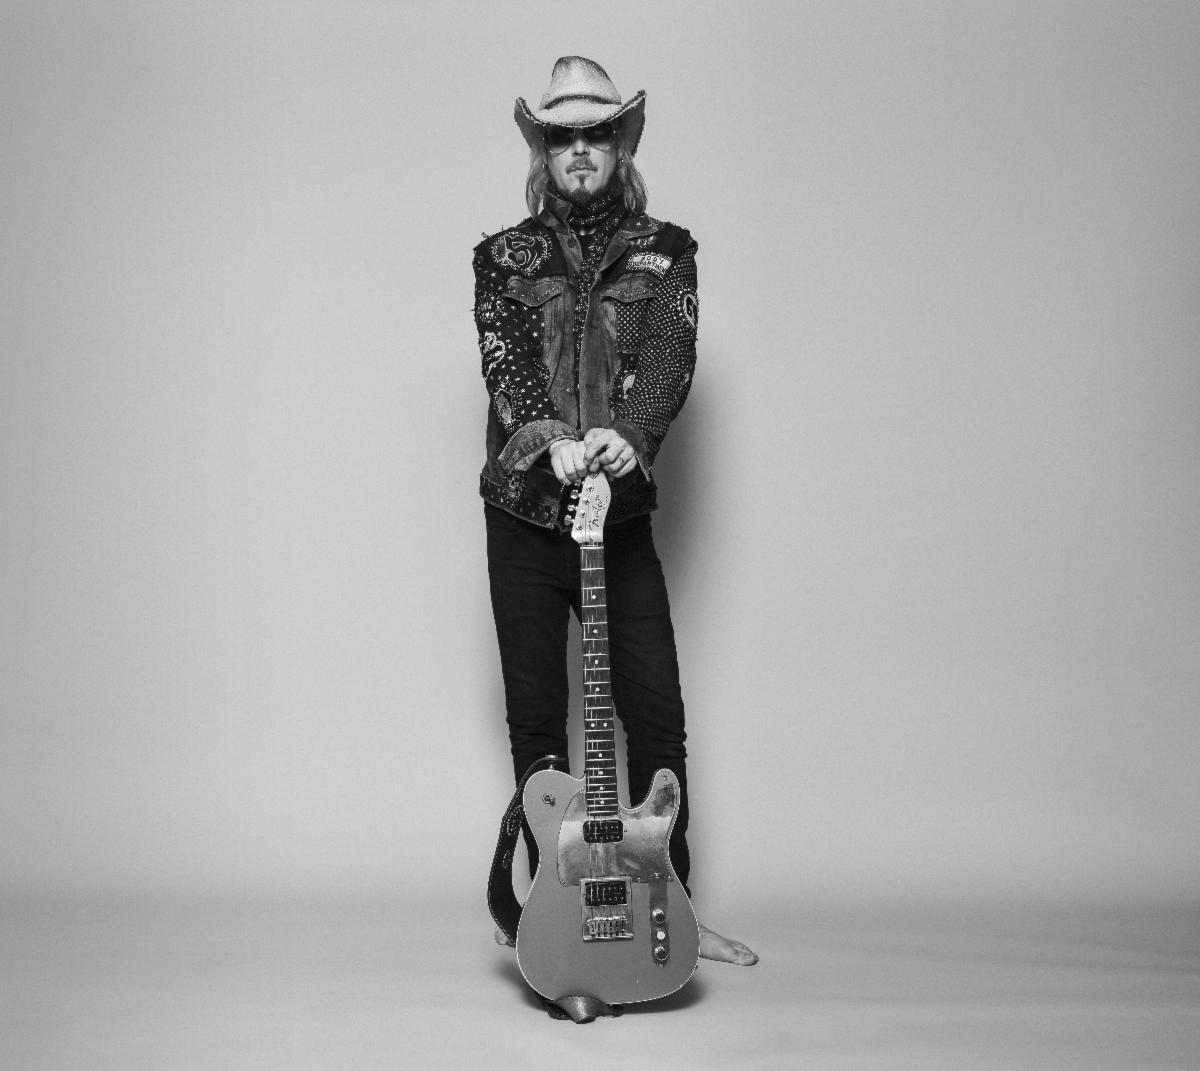 Guitar Superstar JOHN 5 Premieres Instrumental Masterpiece "The Ghost” ﻿at Guitar World